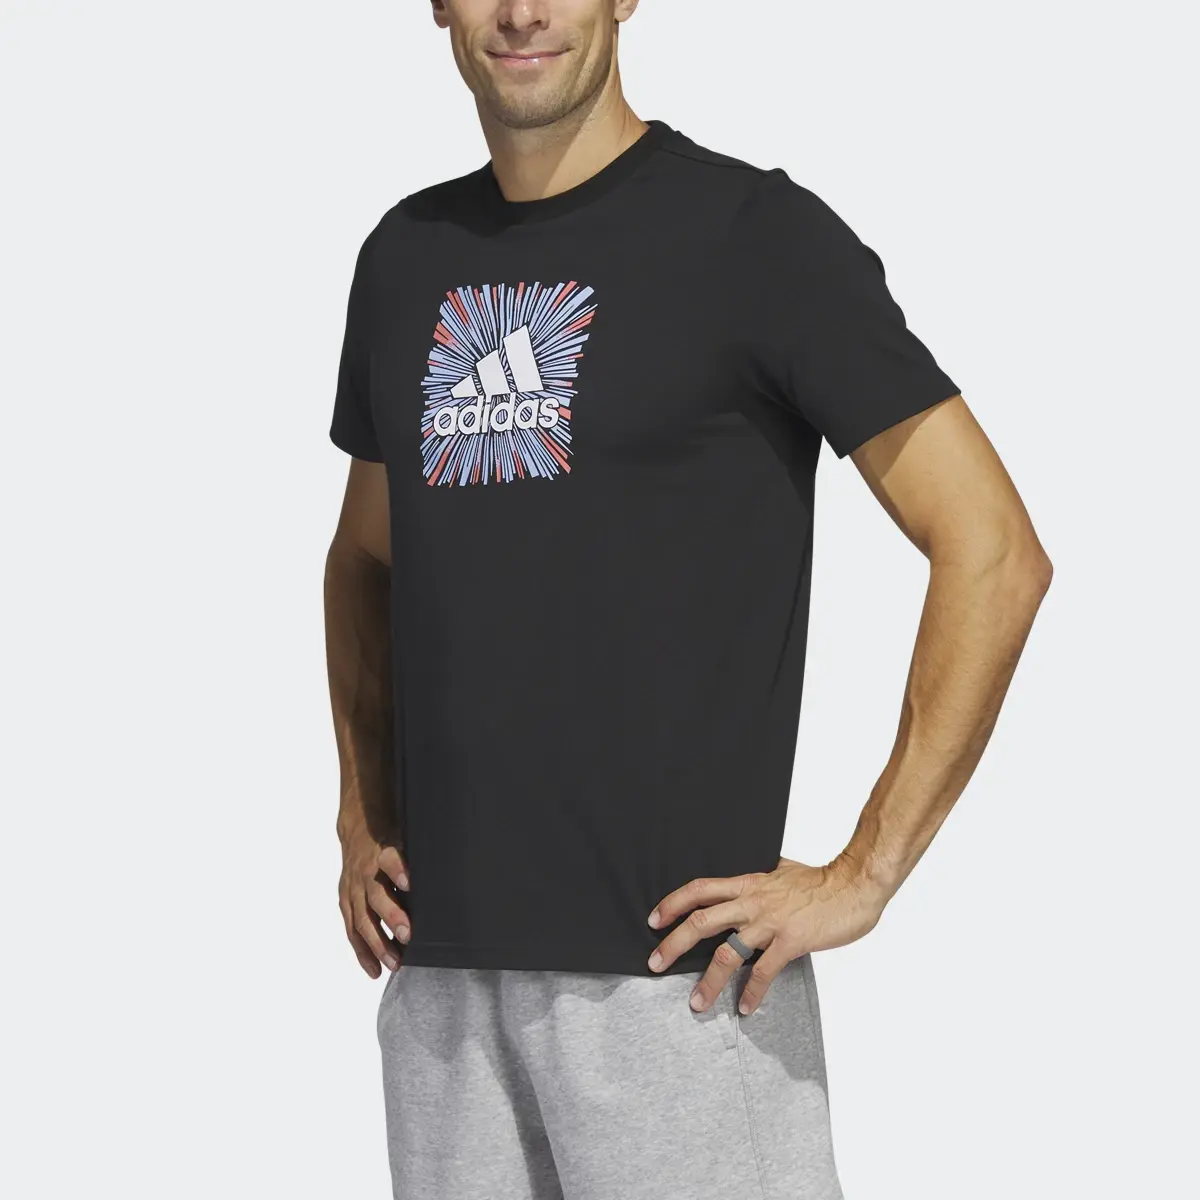 Adidas Sport Optimist Sun Logo Sportswear Graphic Tee (Short Sleeve). 1